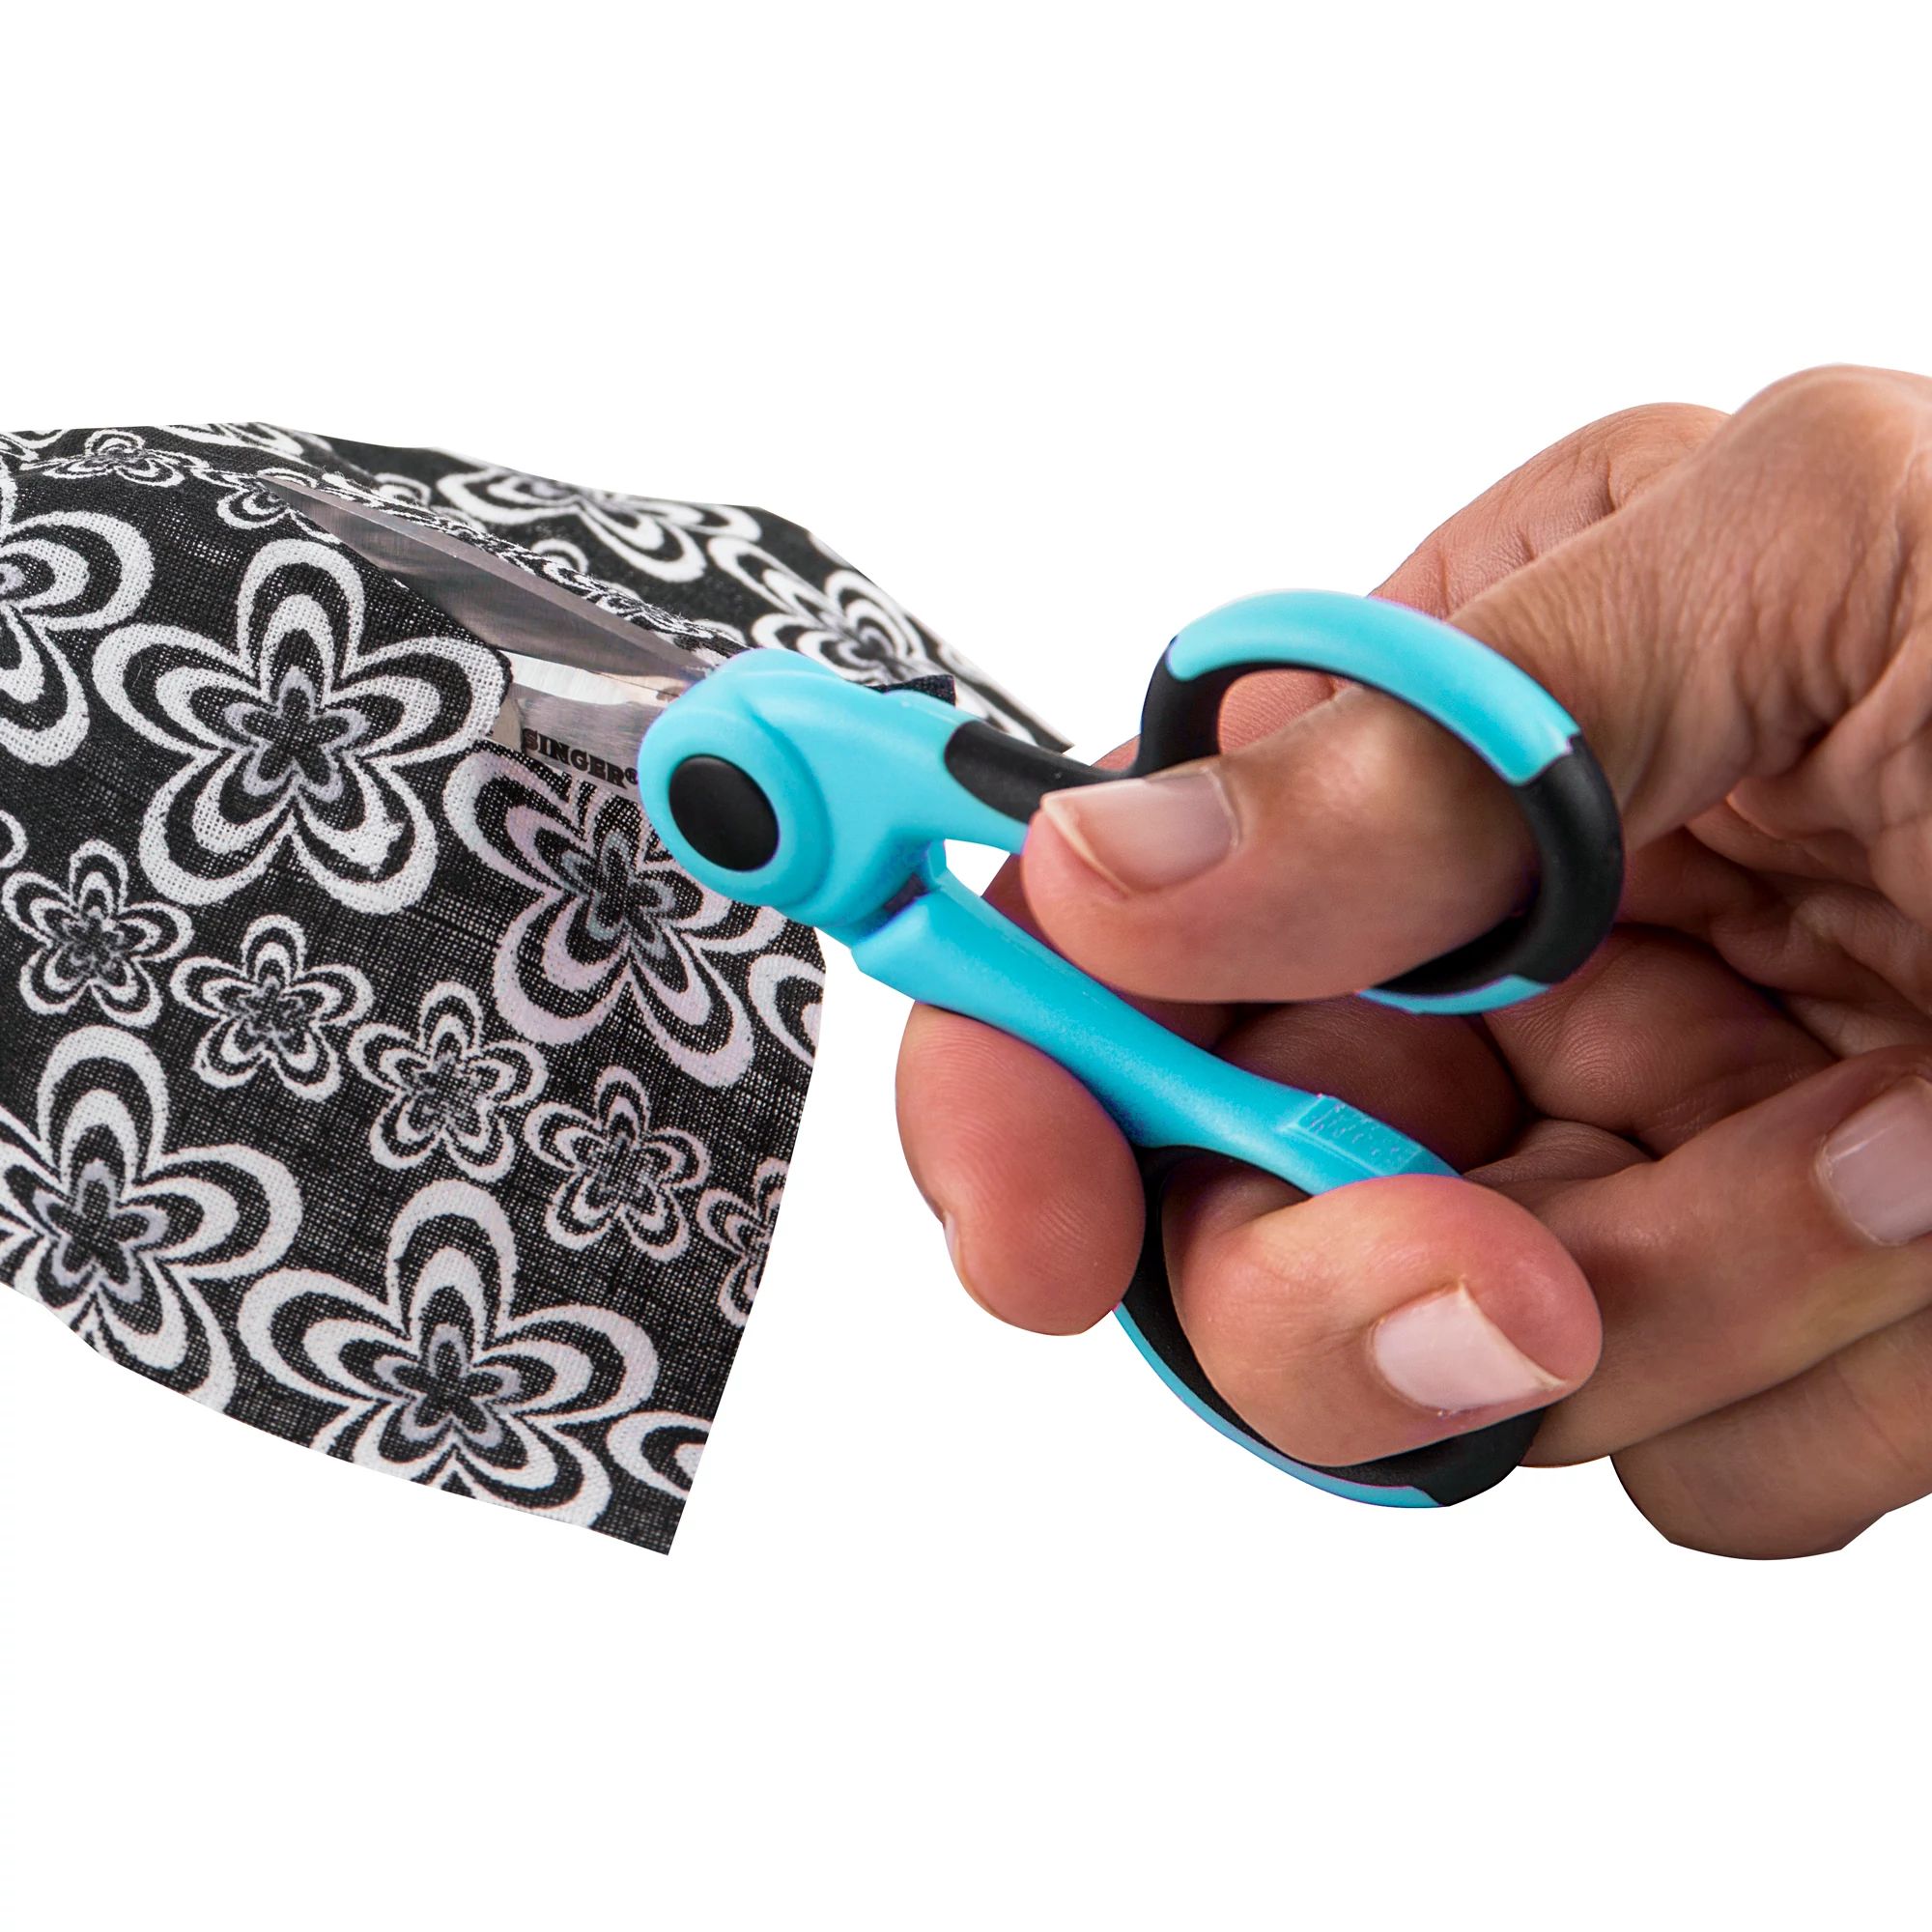 SINGER 9.5 ProSeries™ Spring Assist Scissor with Comfort Grip